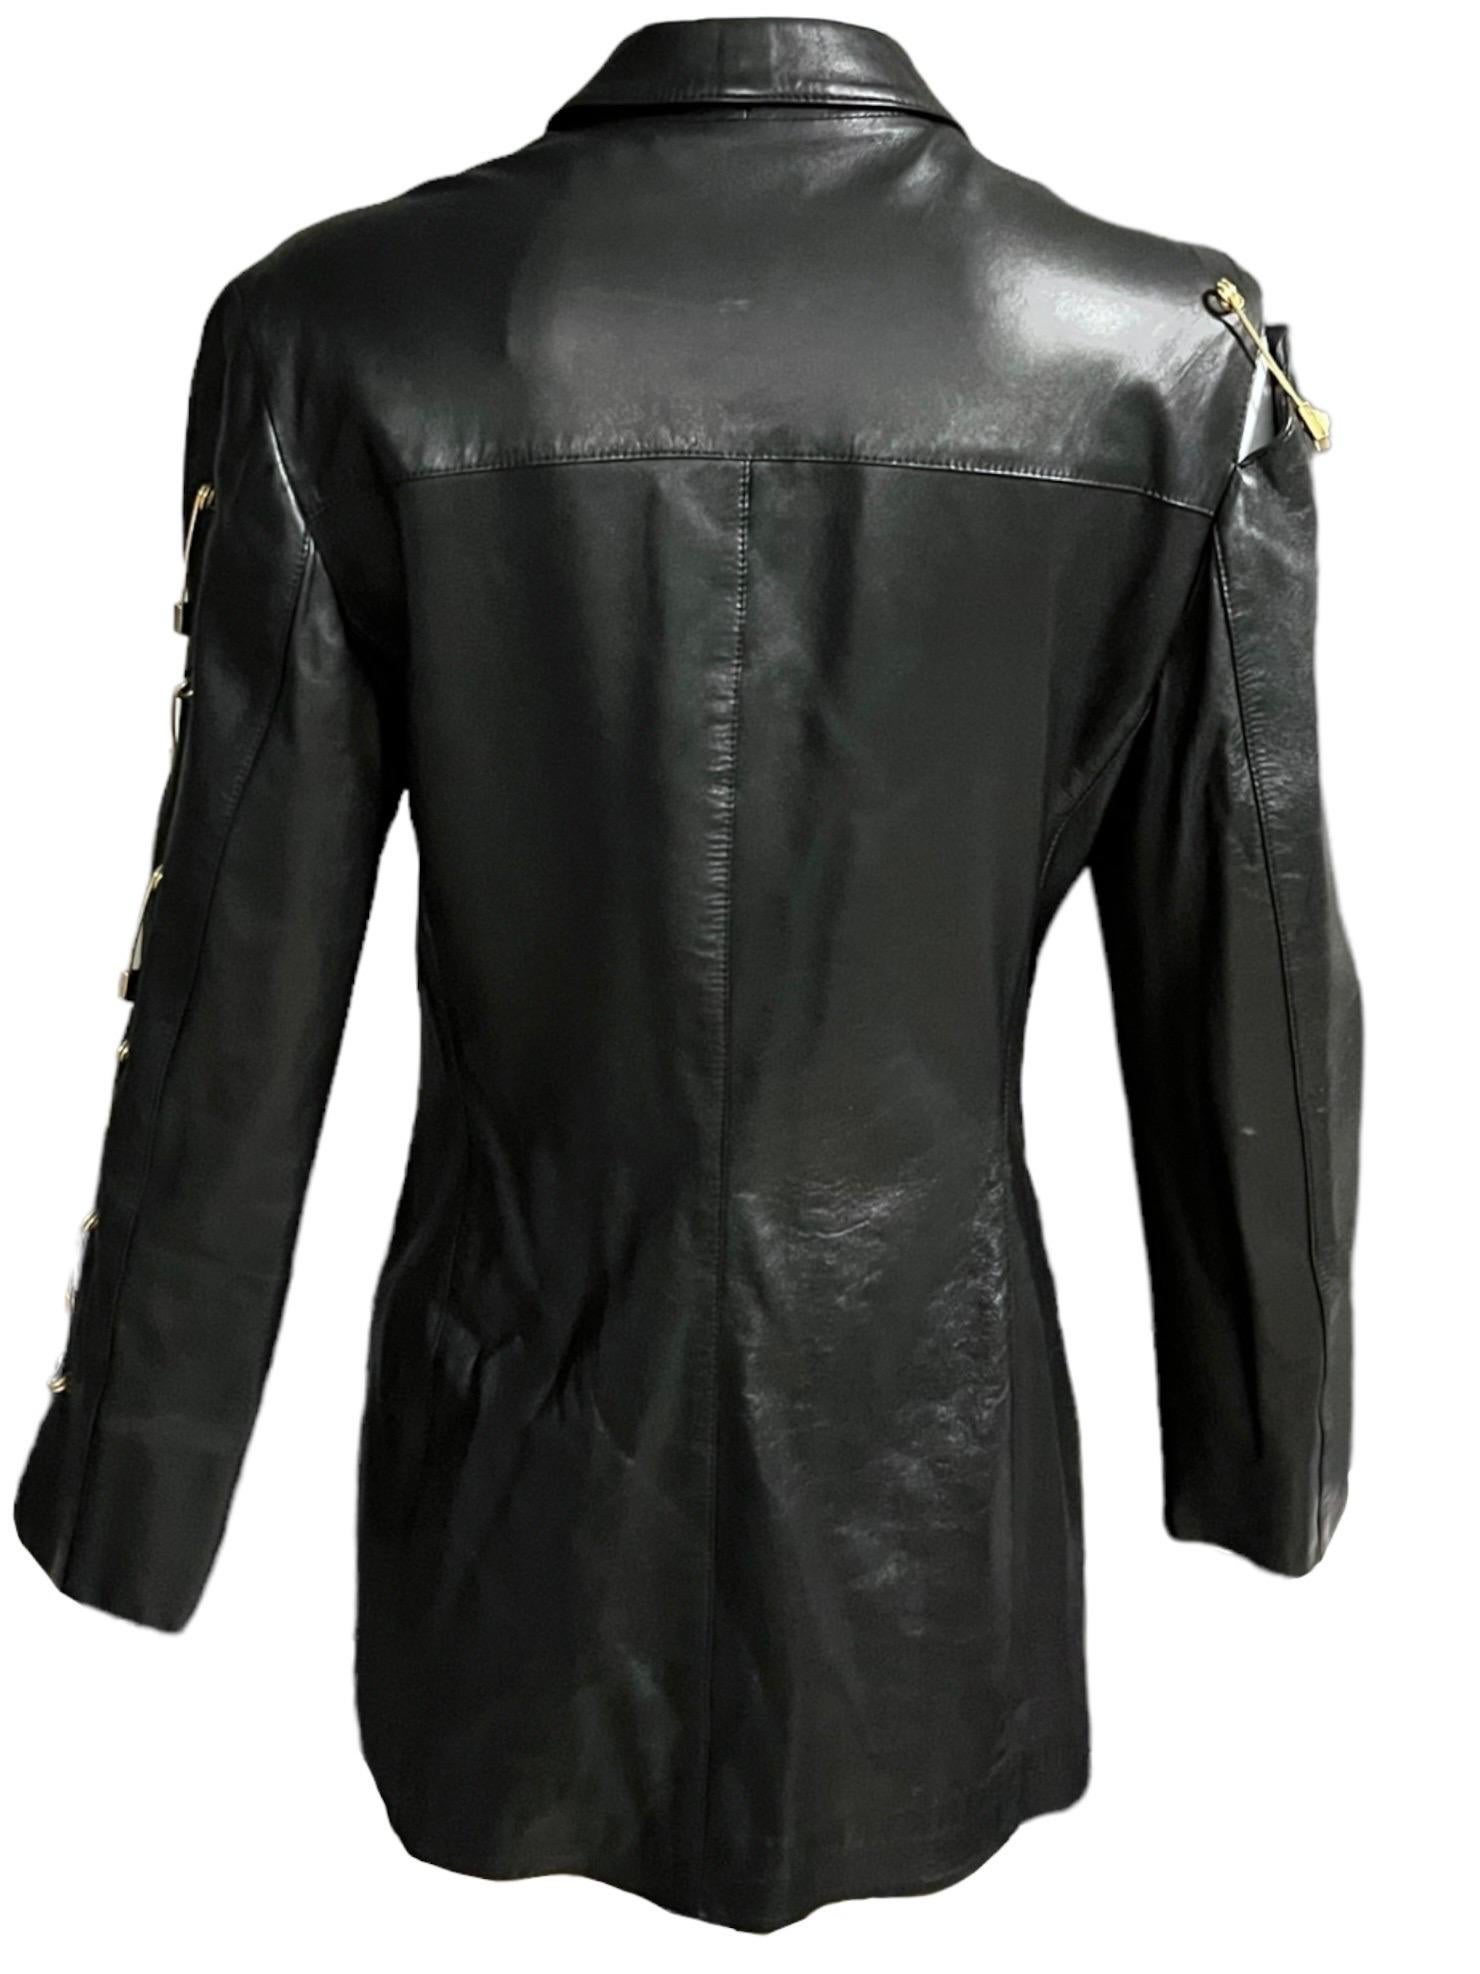 Gianni Versace Versus 90's Vintage Black Leather Safety Pin Jacket 4